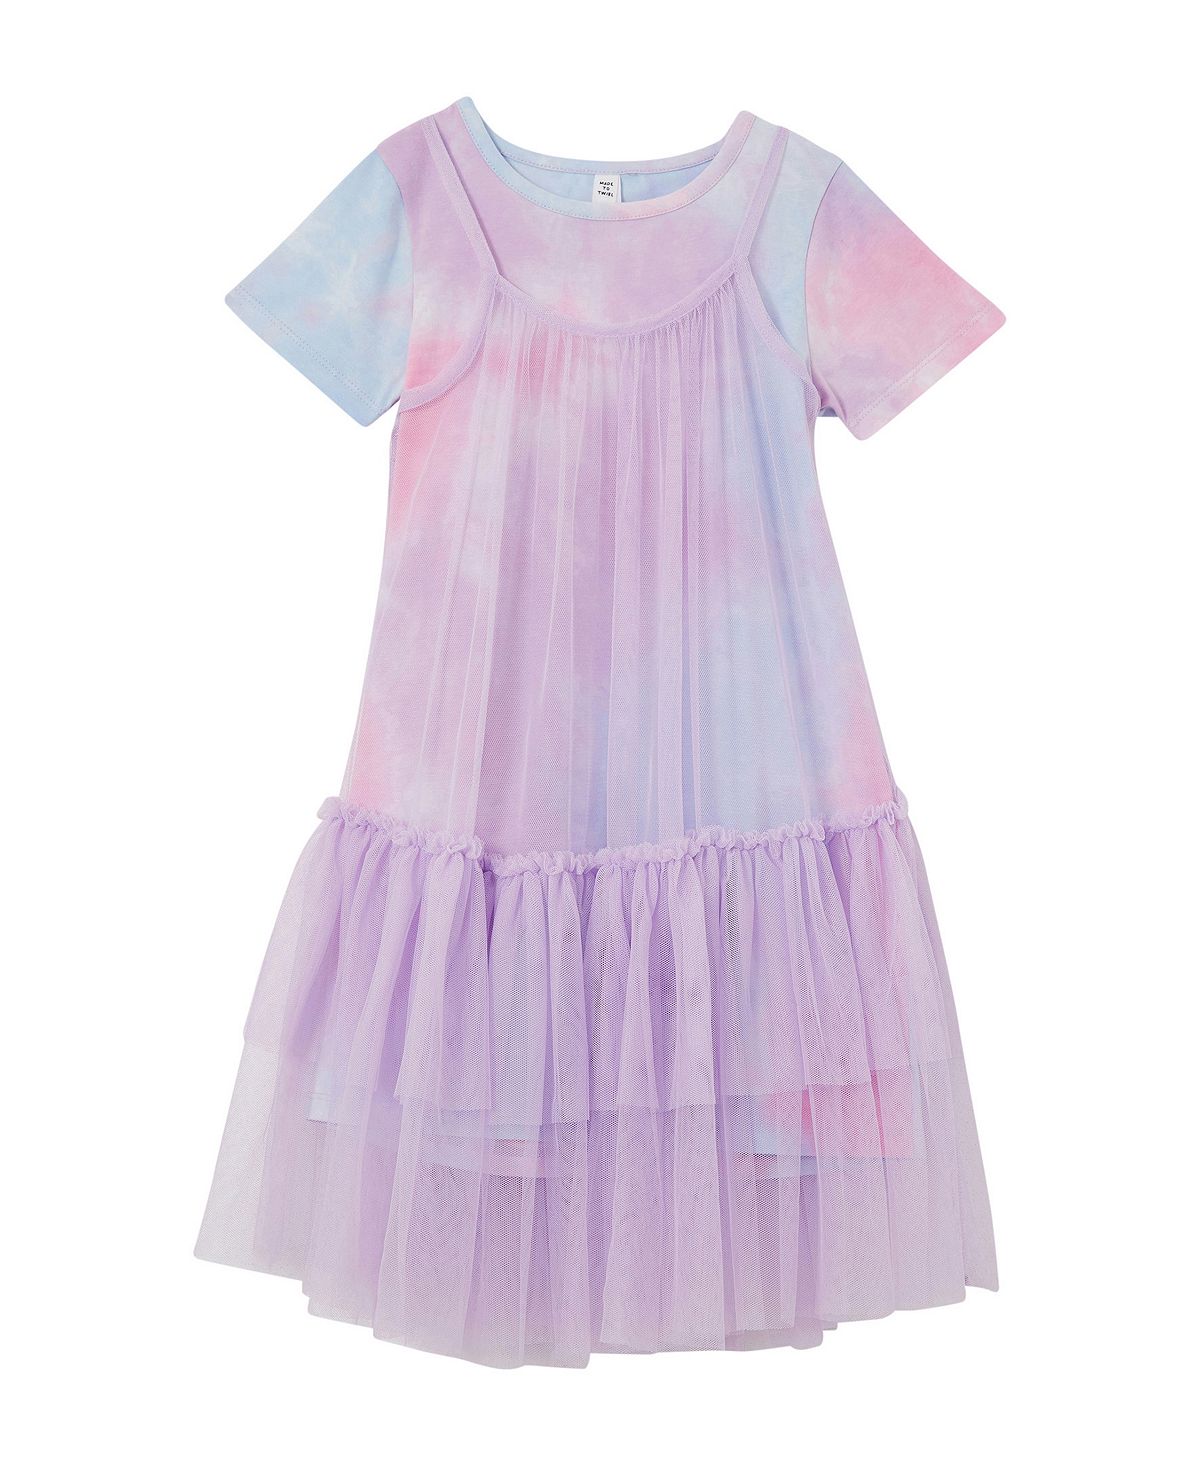 Платье и футболка Little Girls Kristen, комплект из 2 предметов COTTON ON flagicts 3x5 ft tie dye smiley rainbow flag